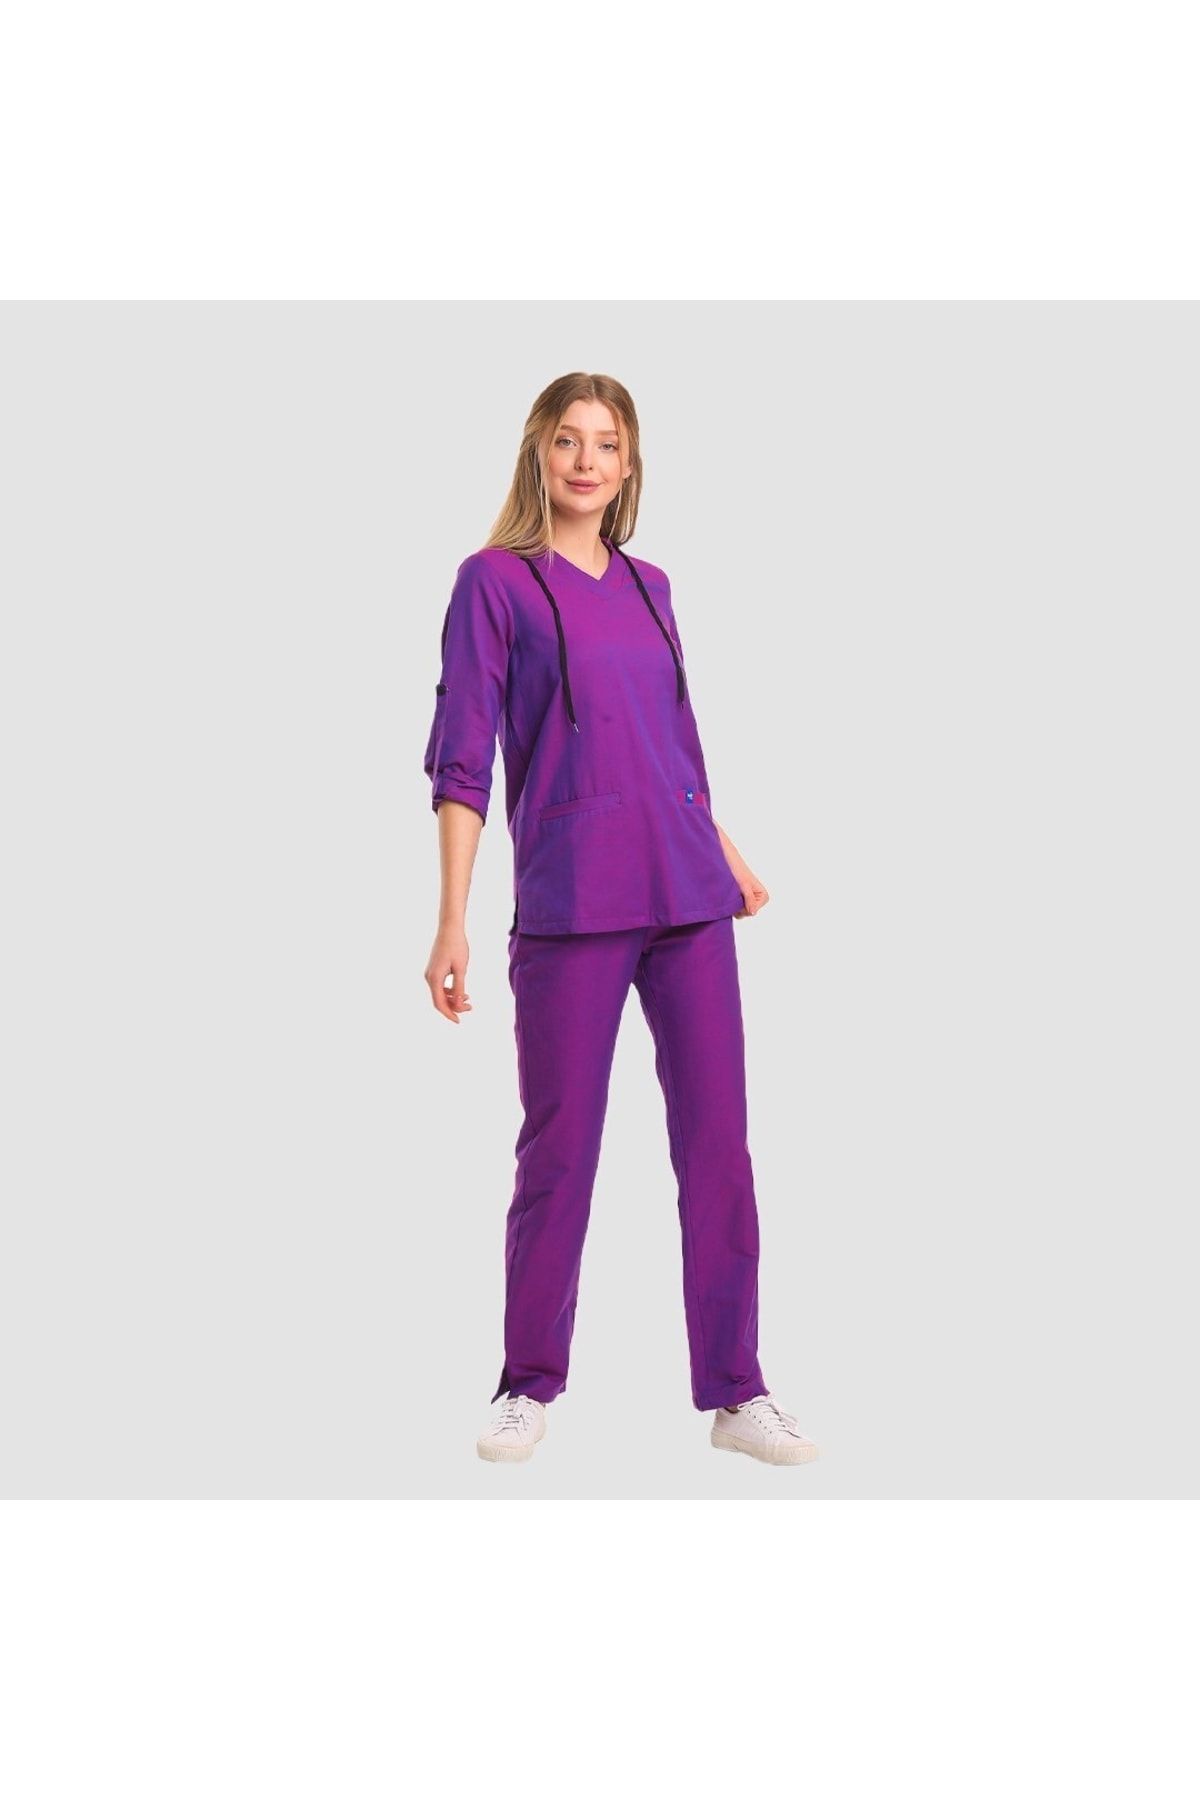 Wio Uniform Violet Mor Kapşonlu Medikal Takım